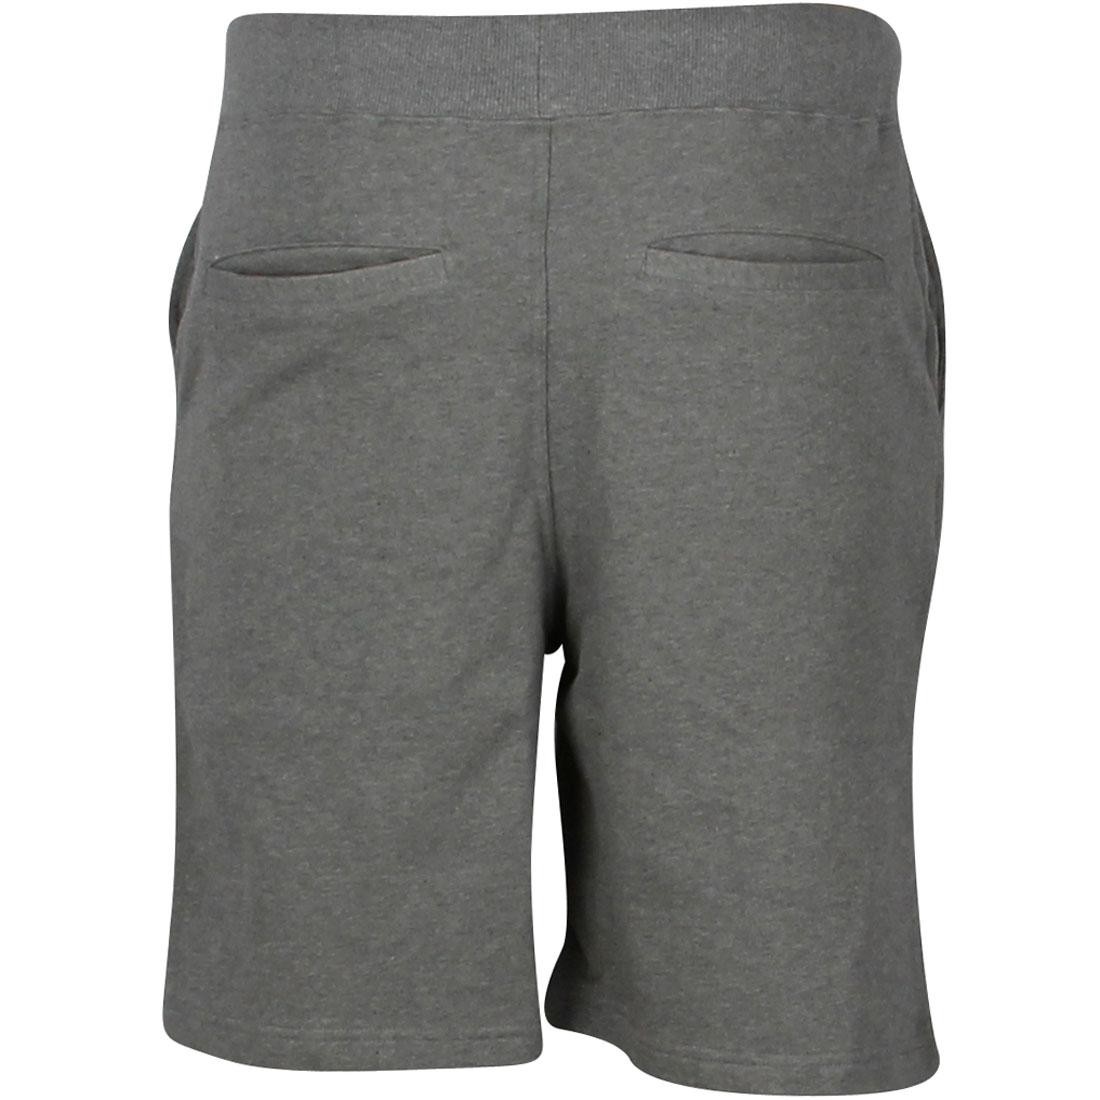 BAIT Basics Sweat Shorts (gray)